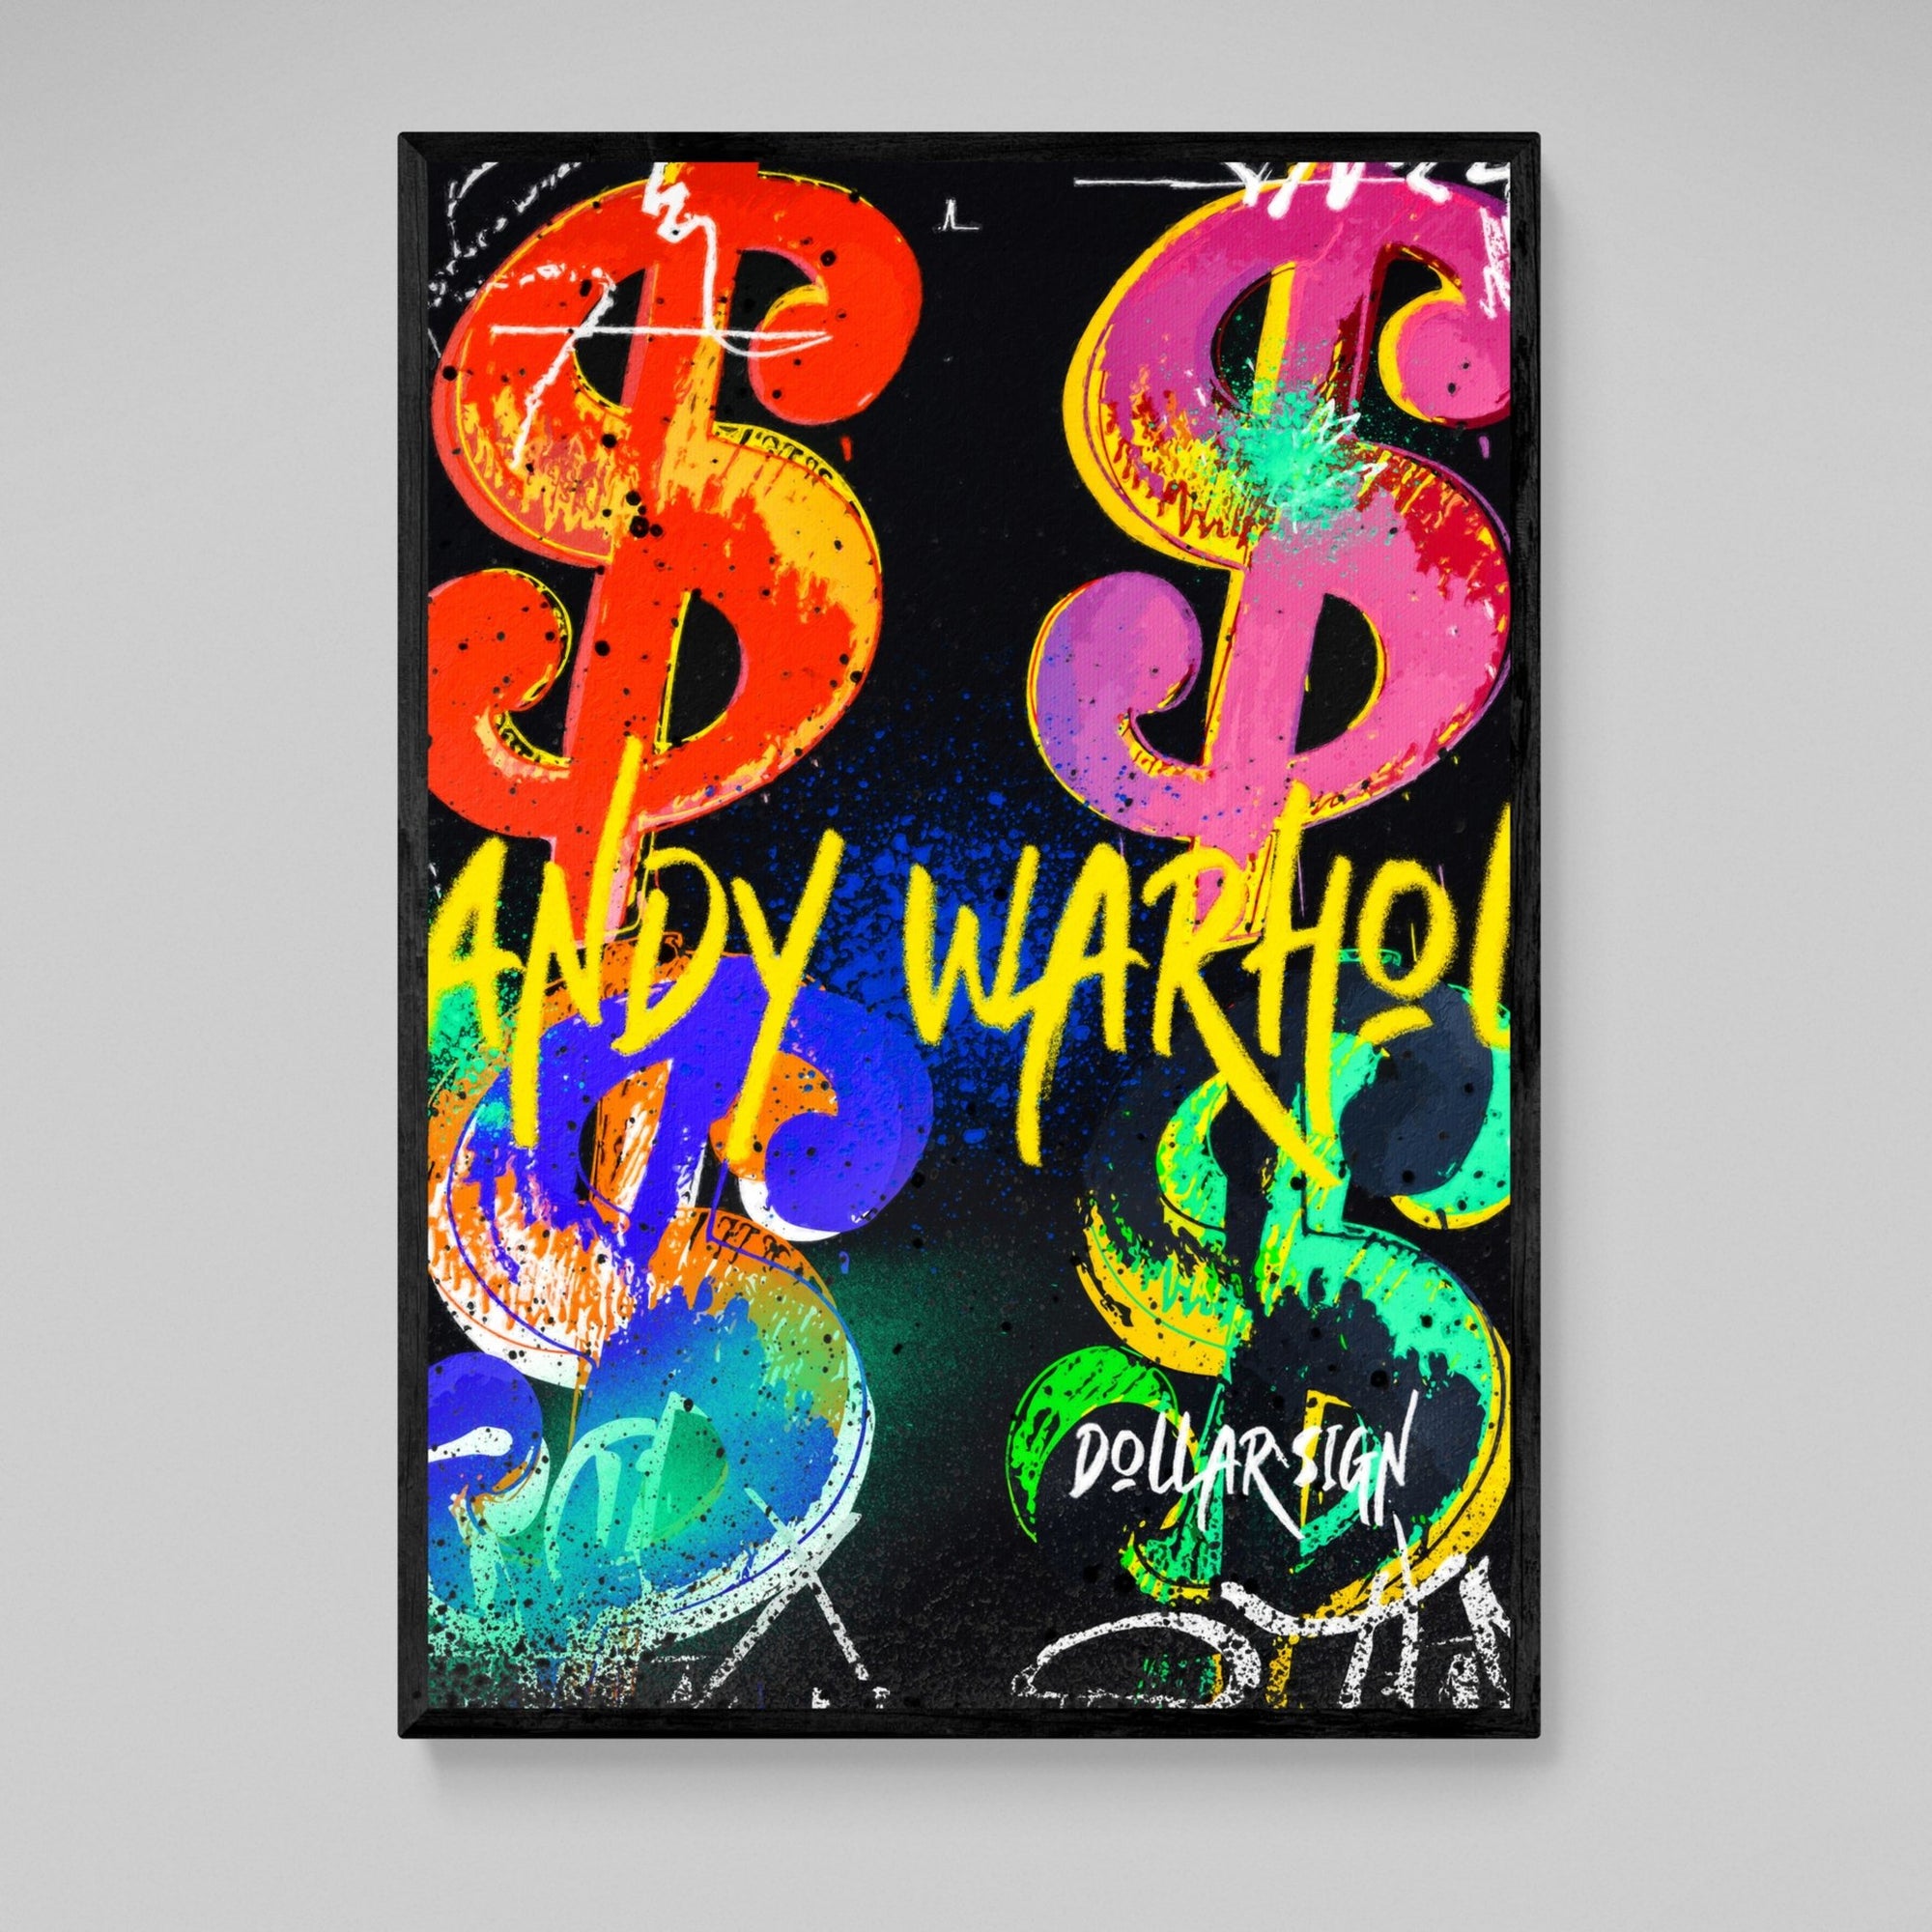 Andy Warhol Tableau - The Art Avenue